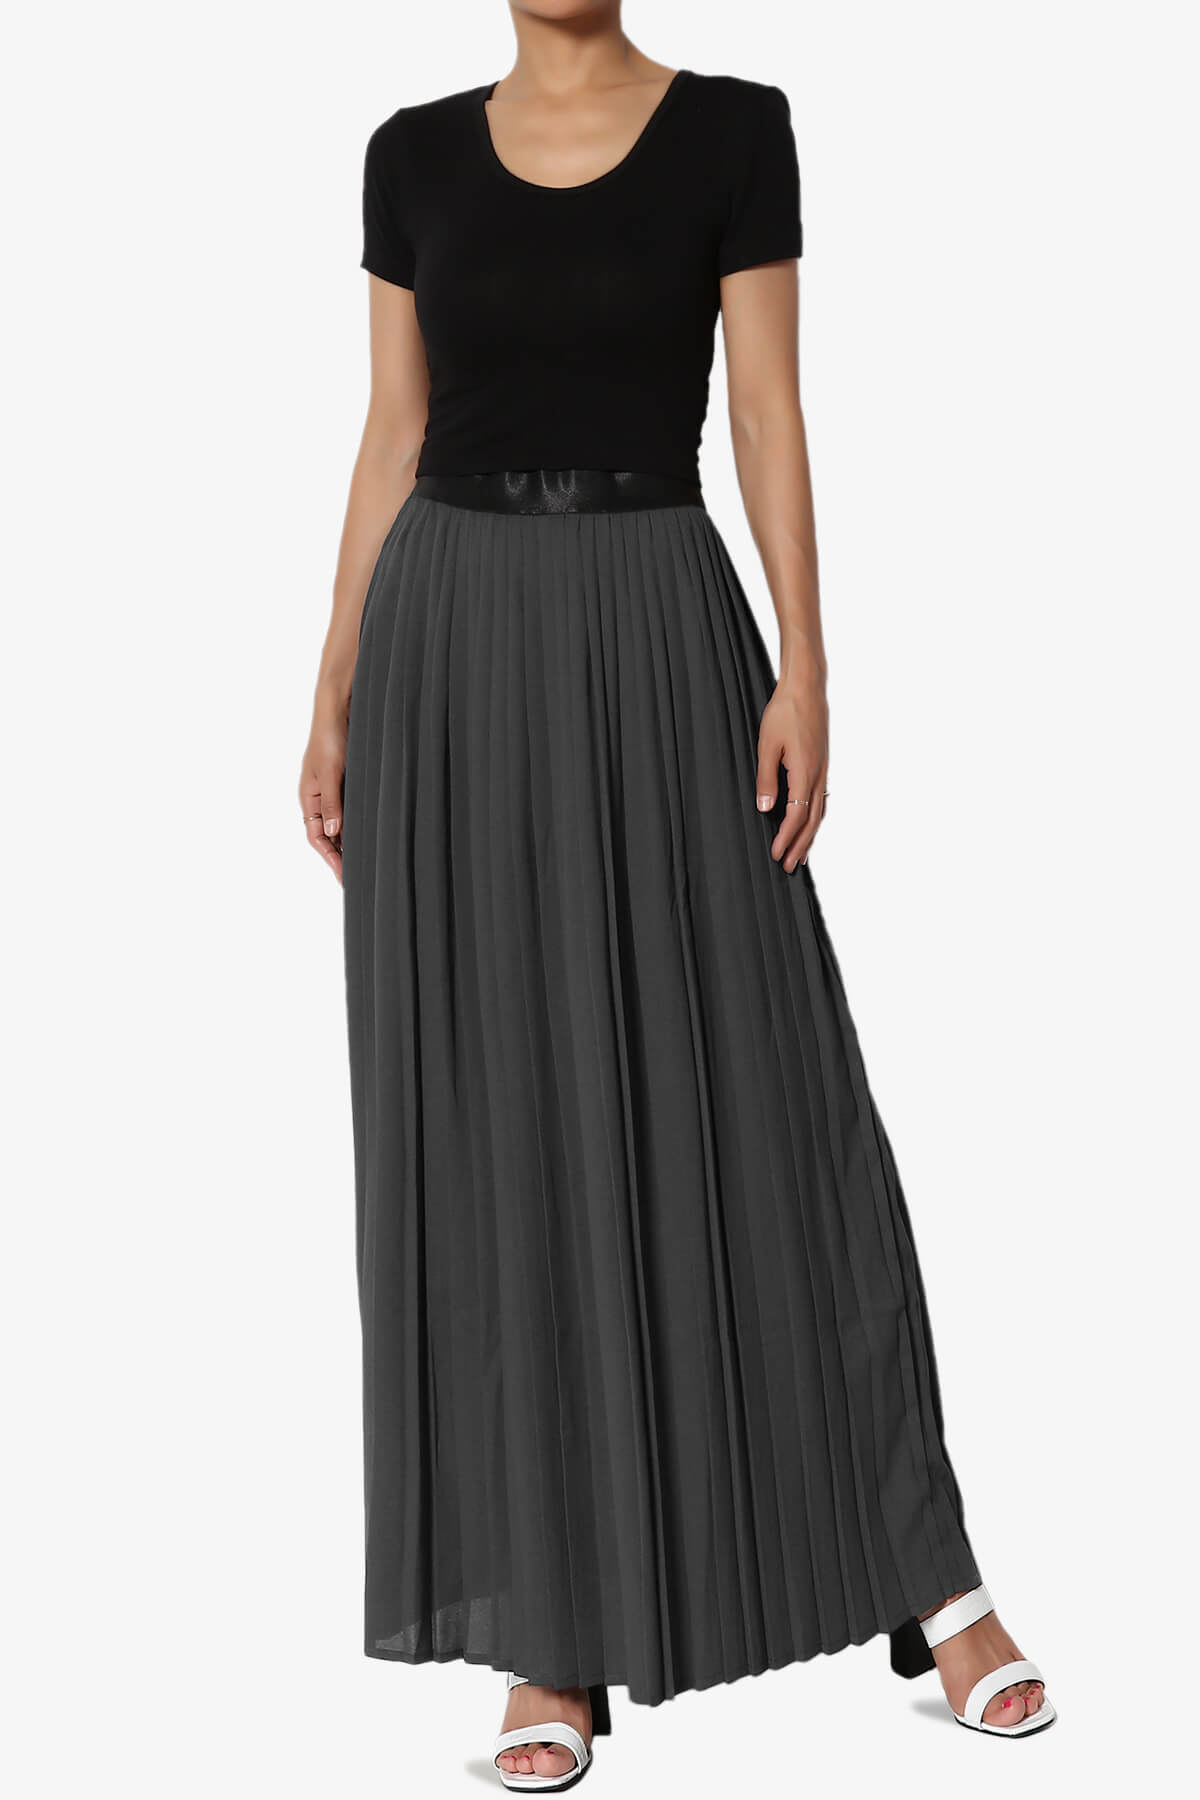 TheMogan Women's Flowy Maxi Pleated Skirt Elegant High Waisted Full-Length Skirt for All Occasions